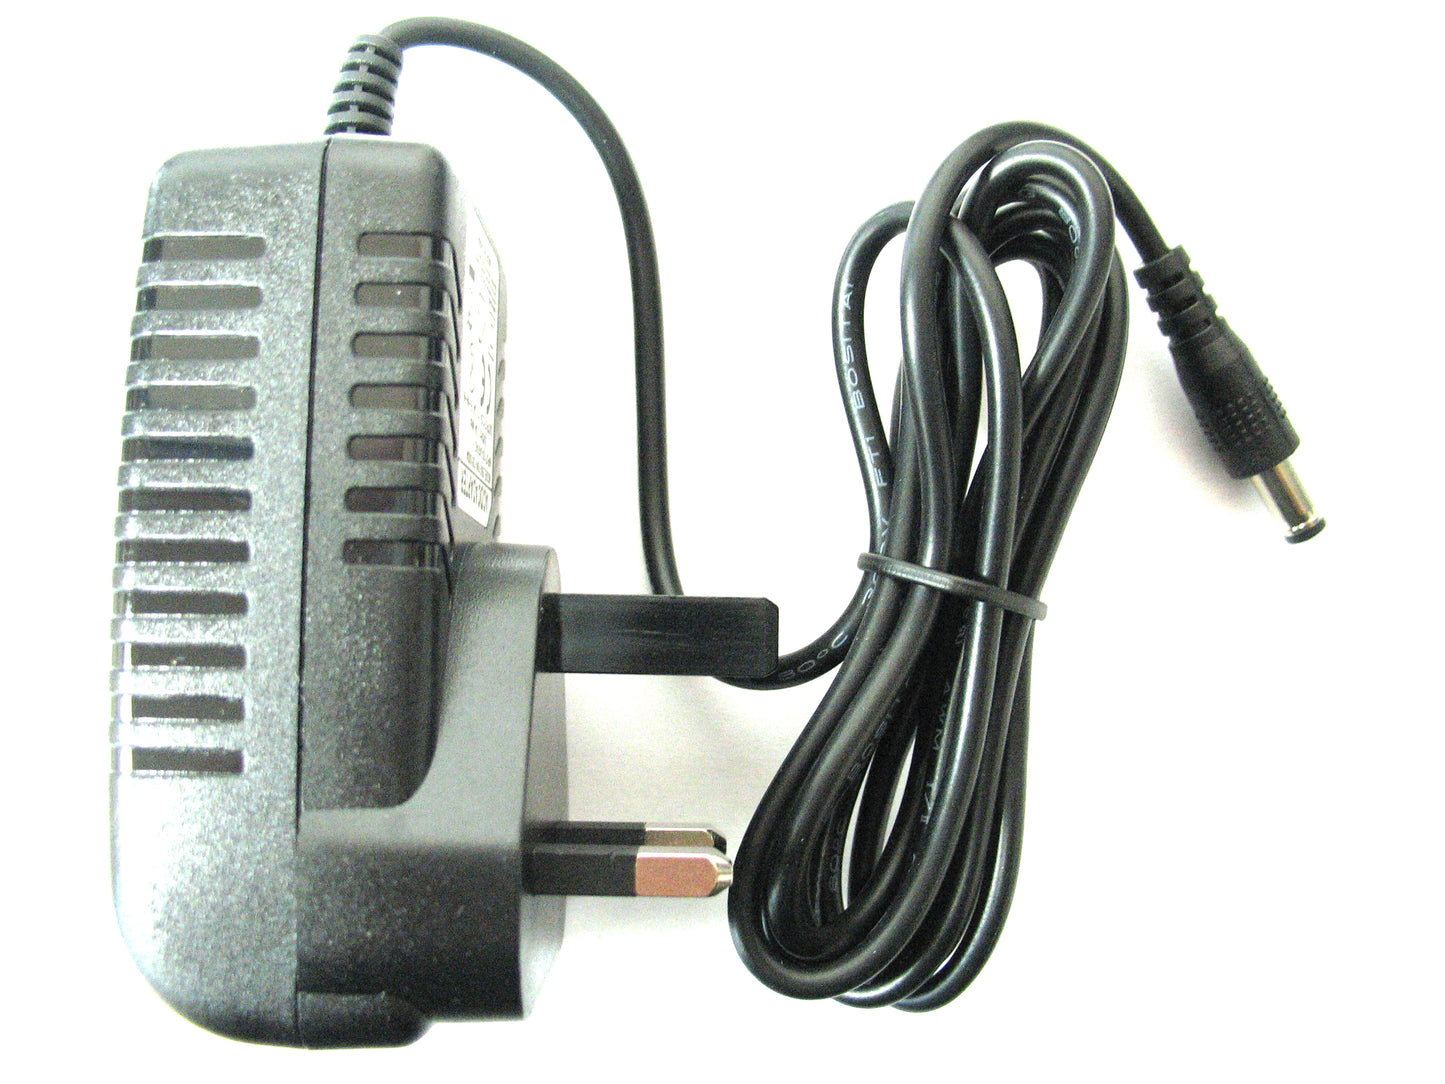 1000ma (1a) 13.5v 13.5w Regulated Switch Mode AC/DC Power Adaptor